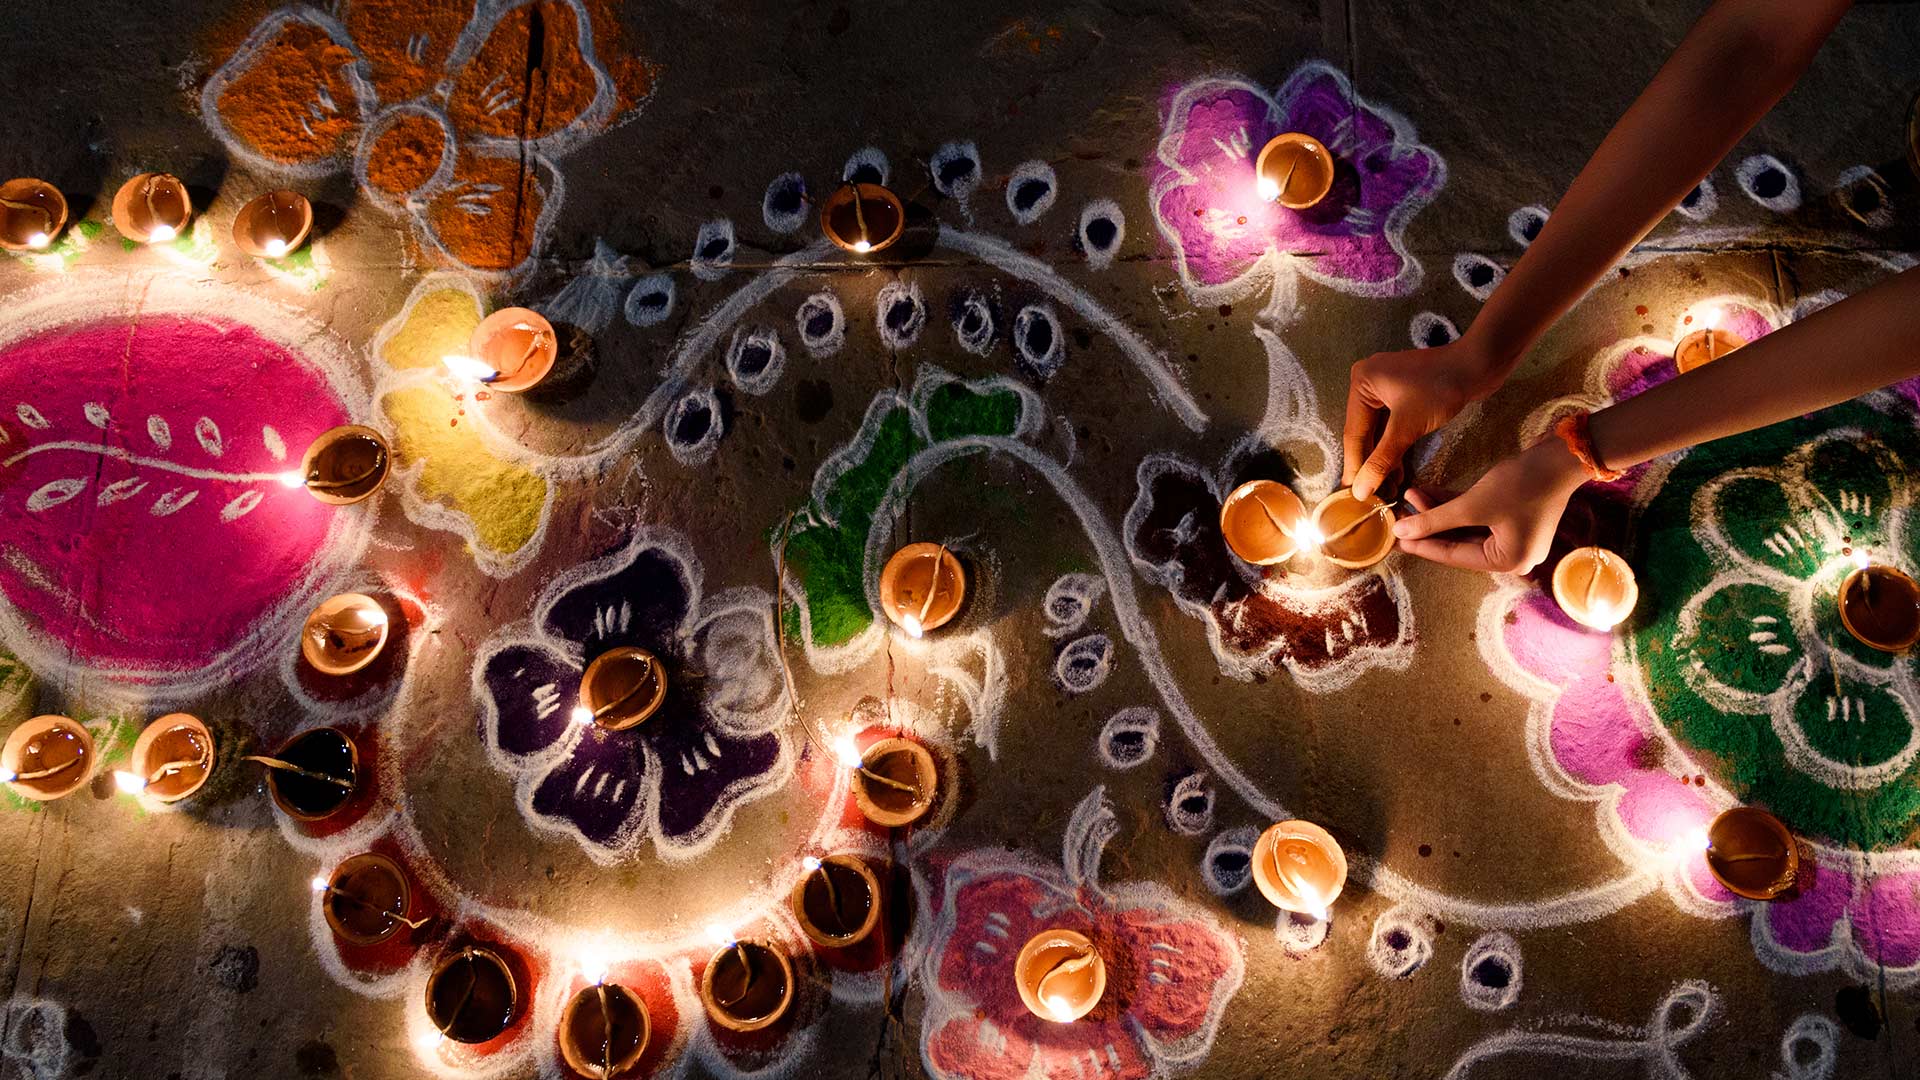 Oil lamps being arranged on rangoli designs during Diwali - Subir Basak/Getty Images)